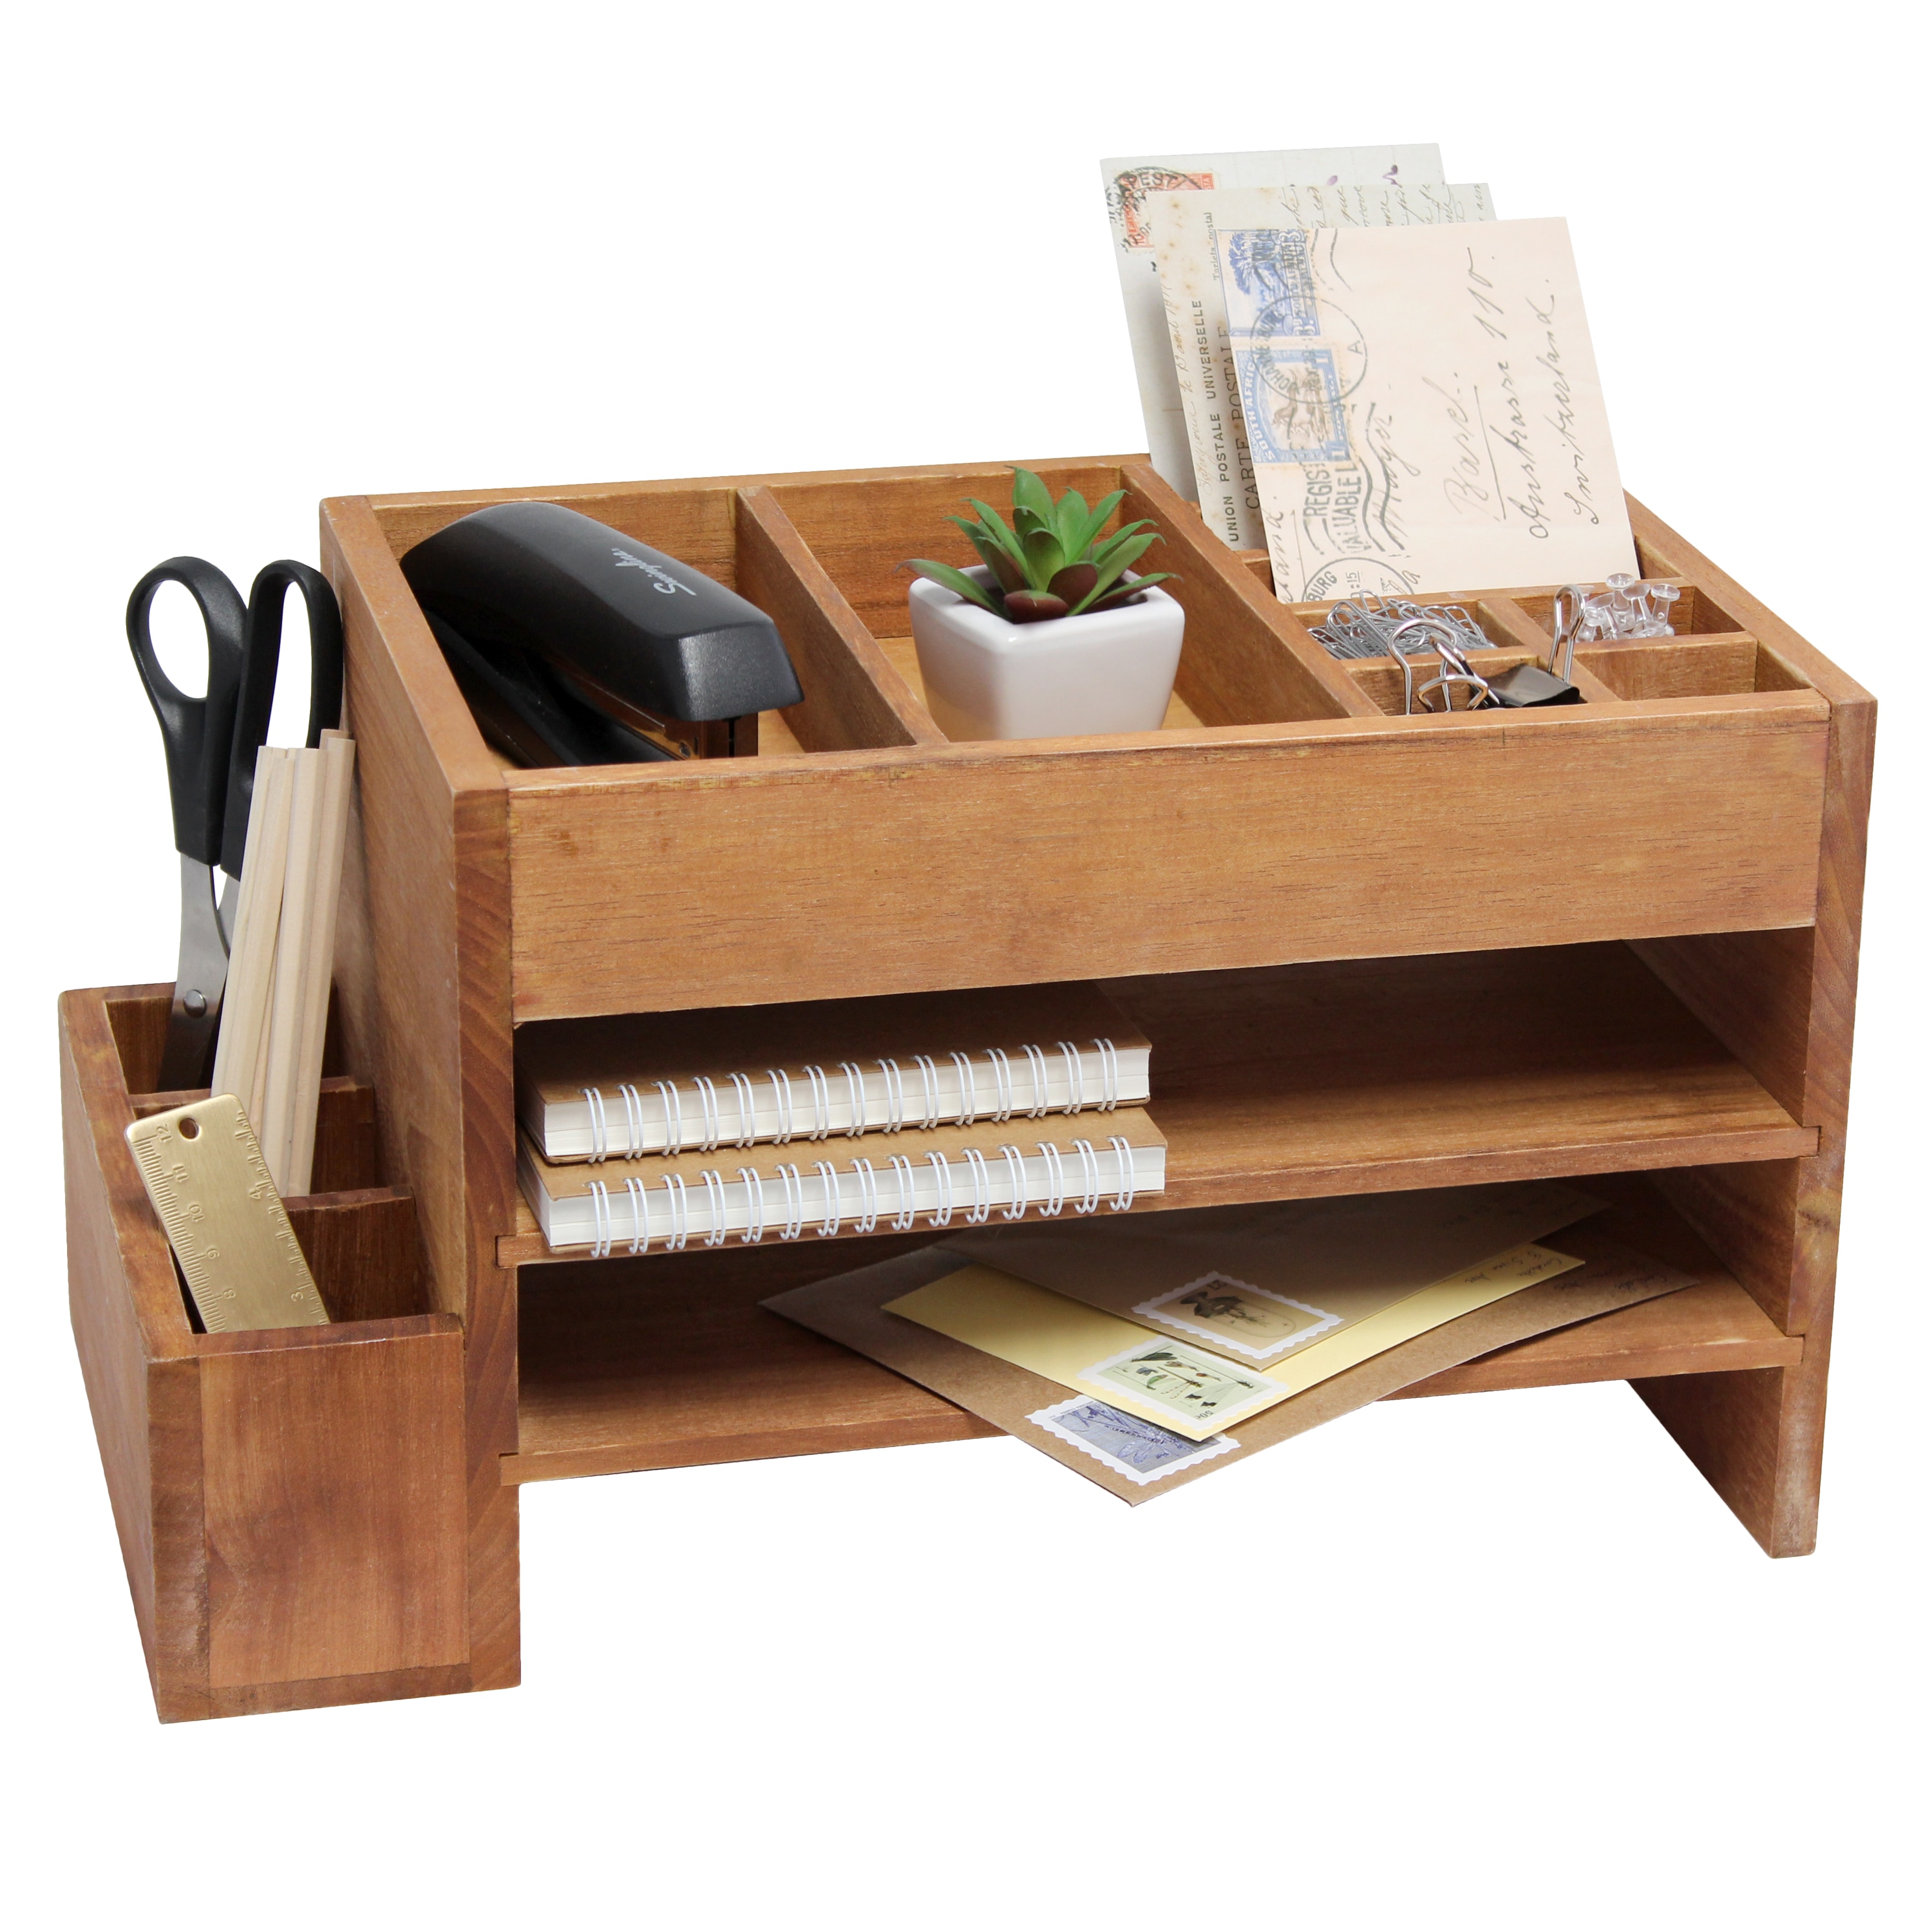 Elegant Designs Wood 14 Compartment Desktop Organizer Set, Pack of 1, Brown